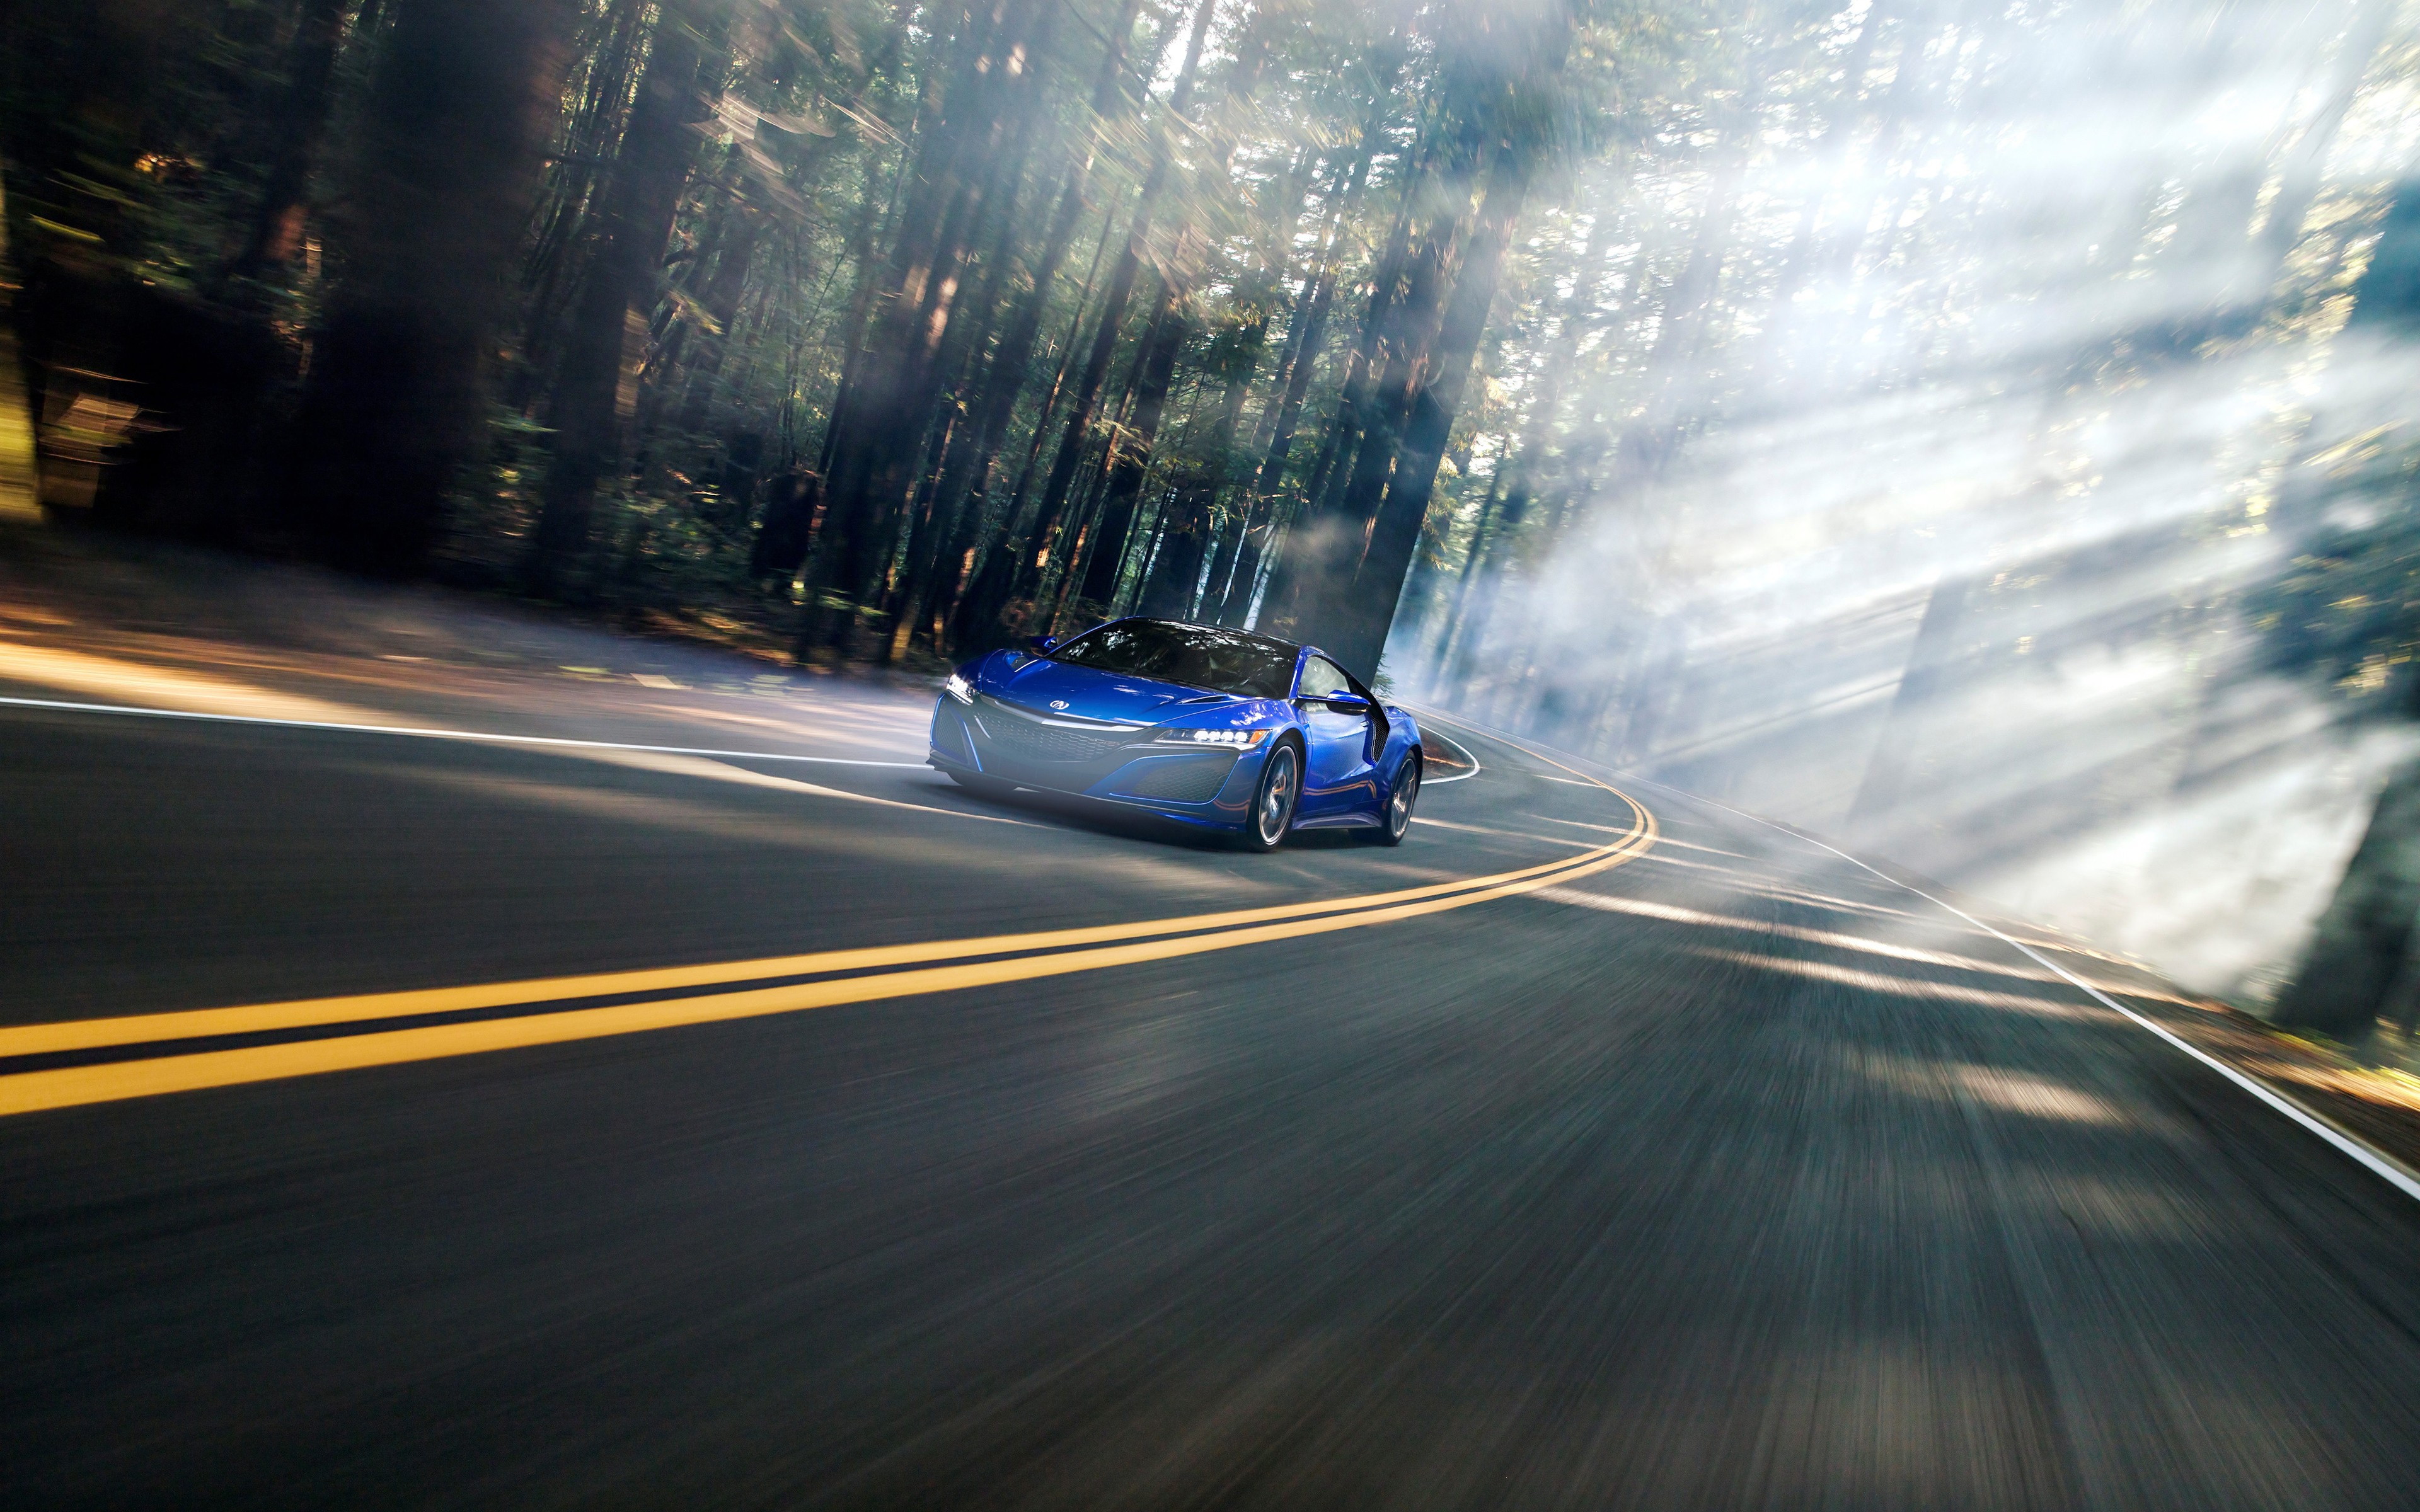 Acura NSX, Road, Motion Blur, Car, Vehicle, Forest, Mist Wallpaper